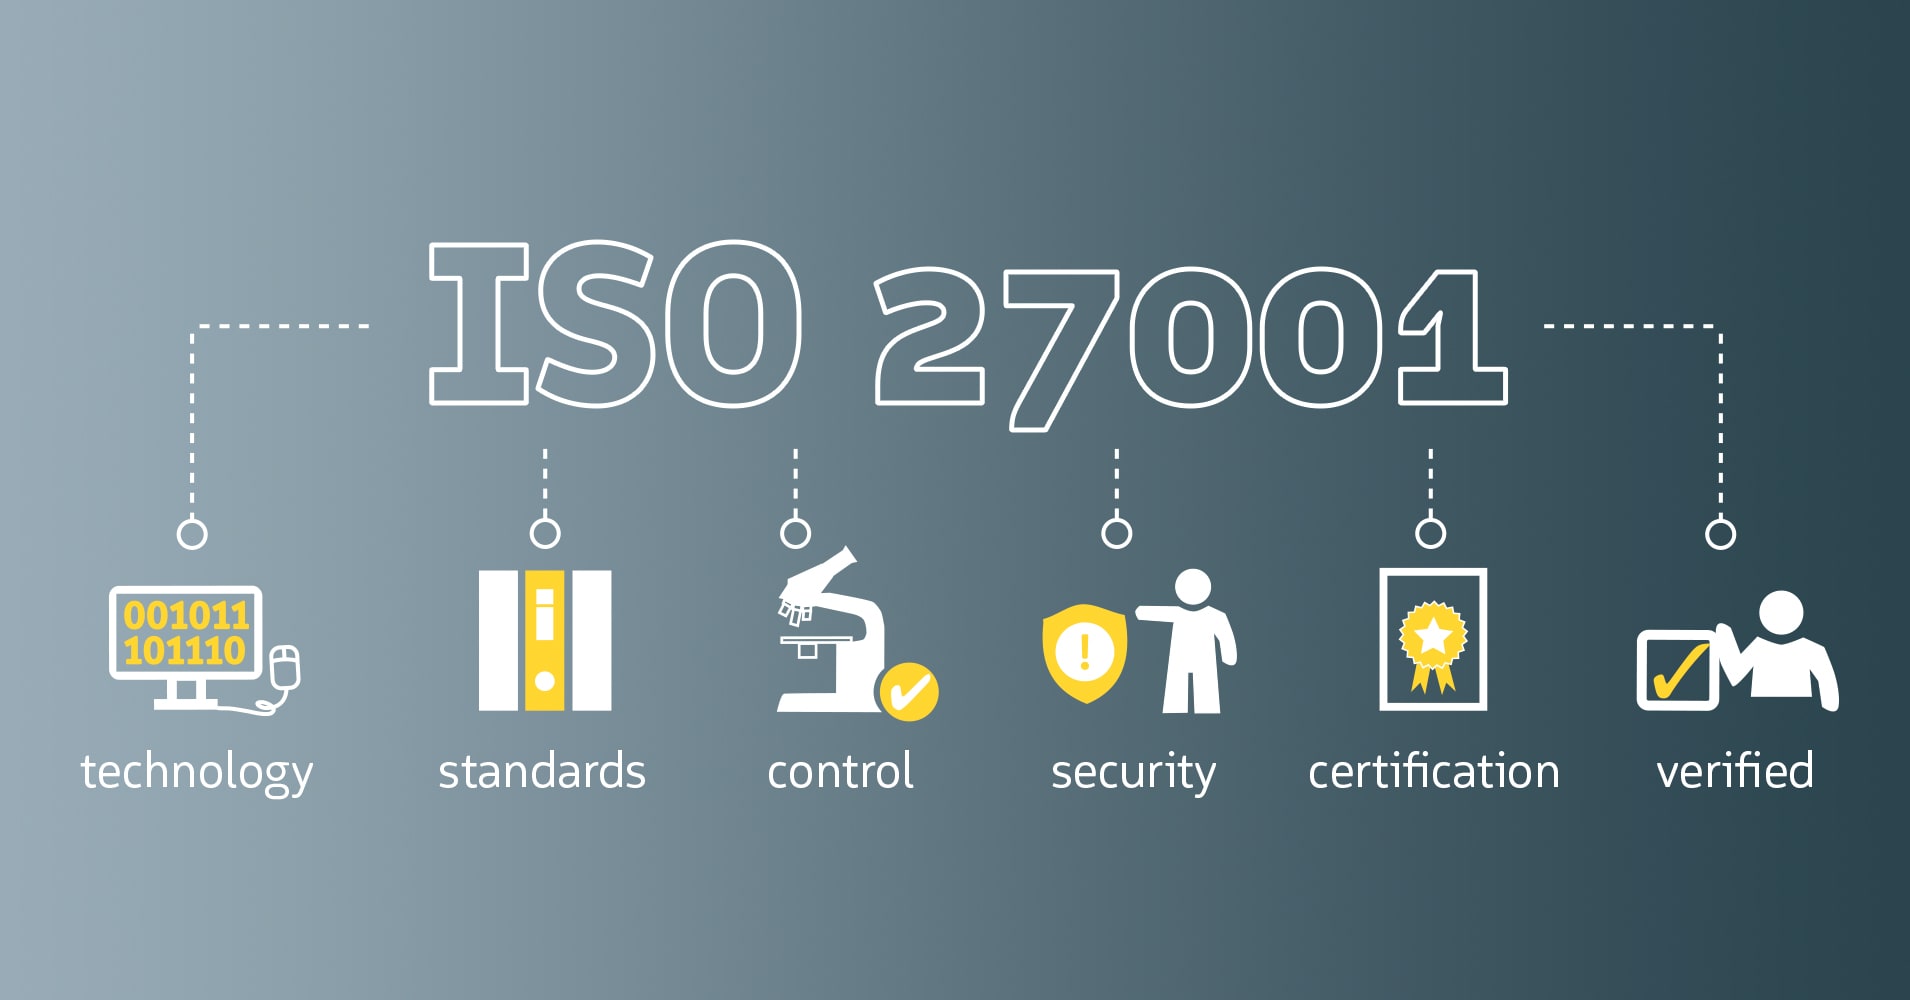 SKIDATA ISO 27001 sertifikasına sahiptir